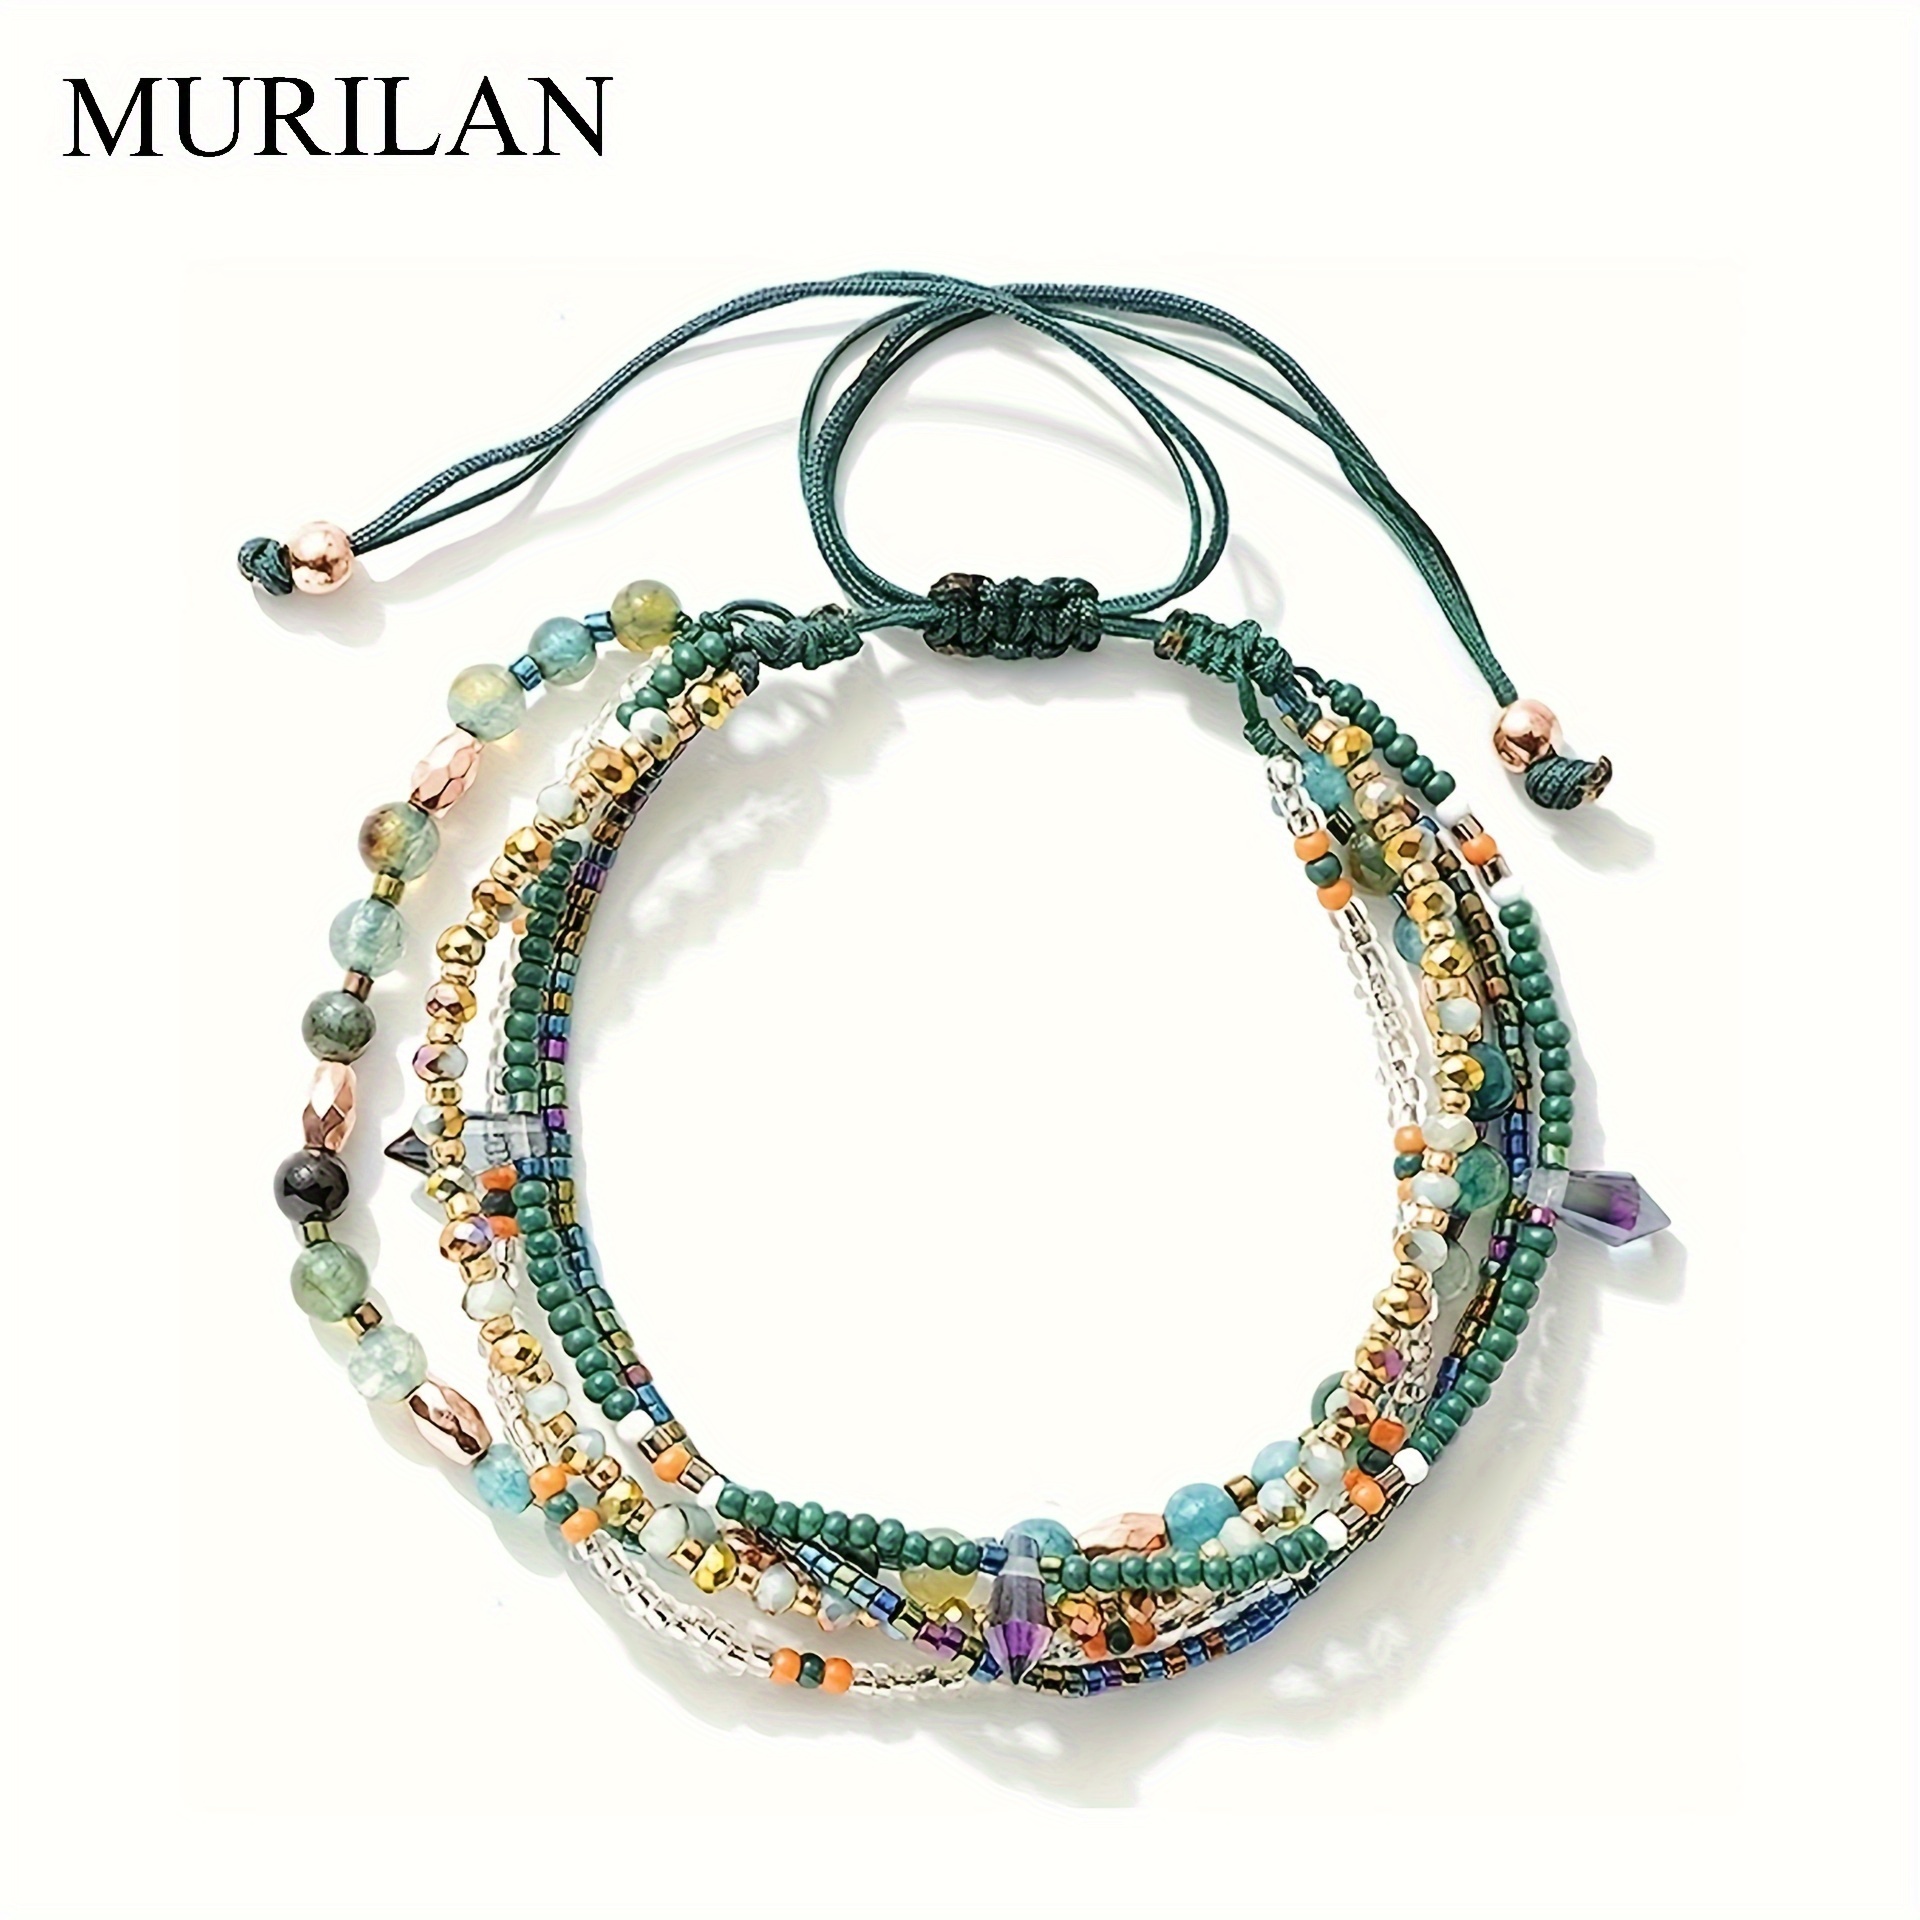 

Gift Handmade Adjustable Wrap Bracelet Bohemian String Braided Beads Anklets Gifts For Women Girls